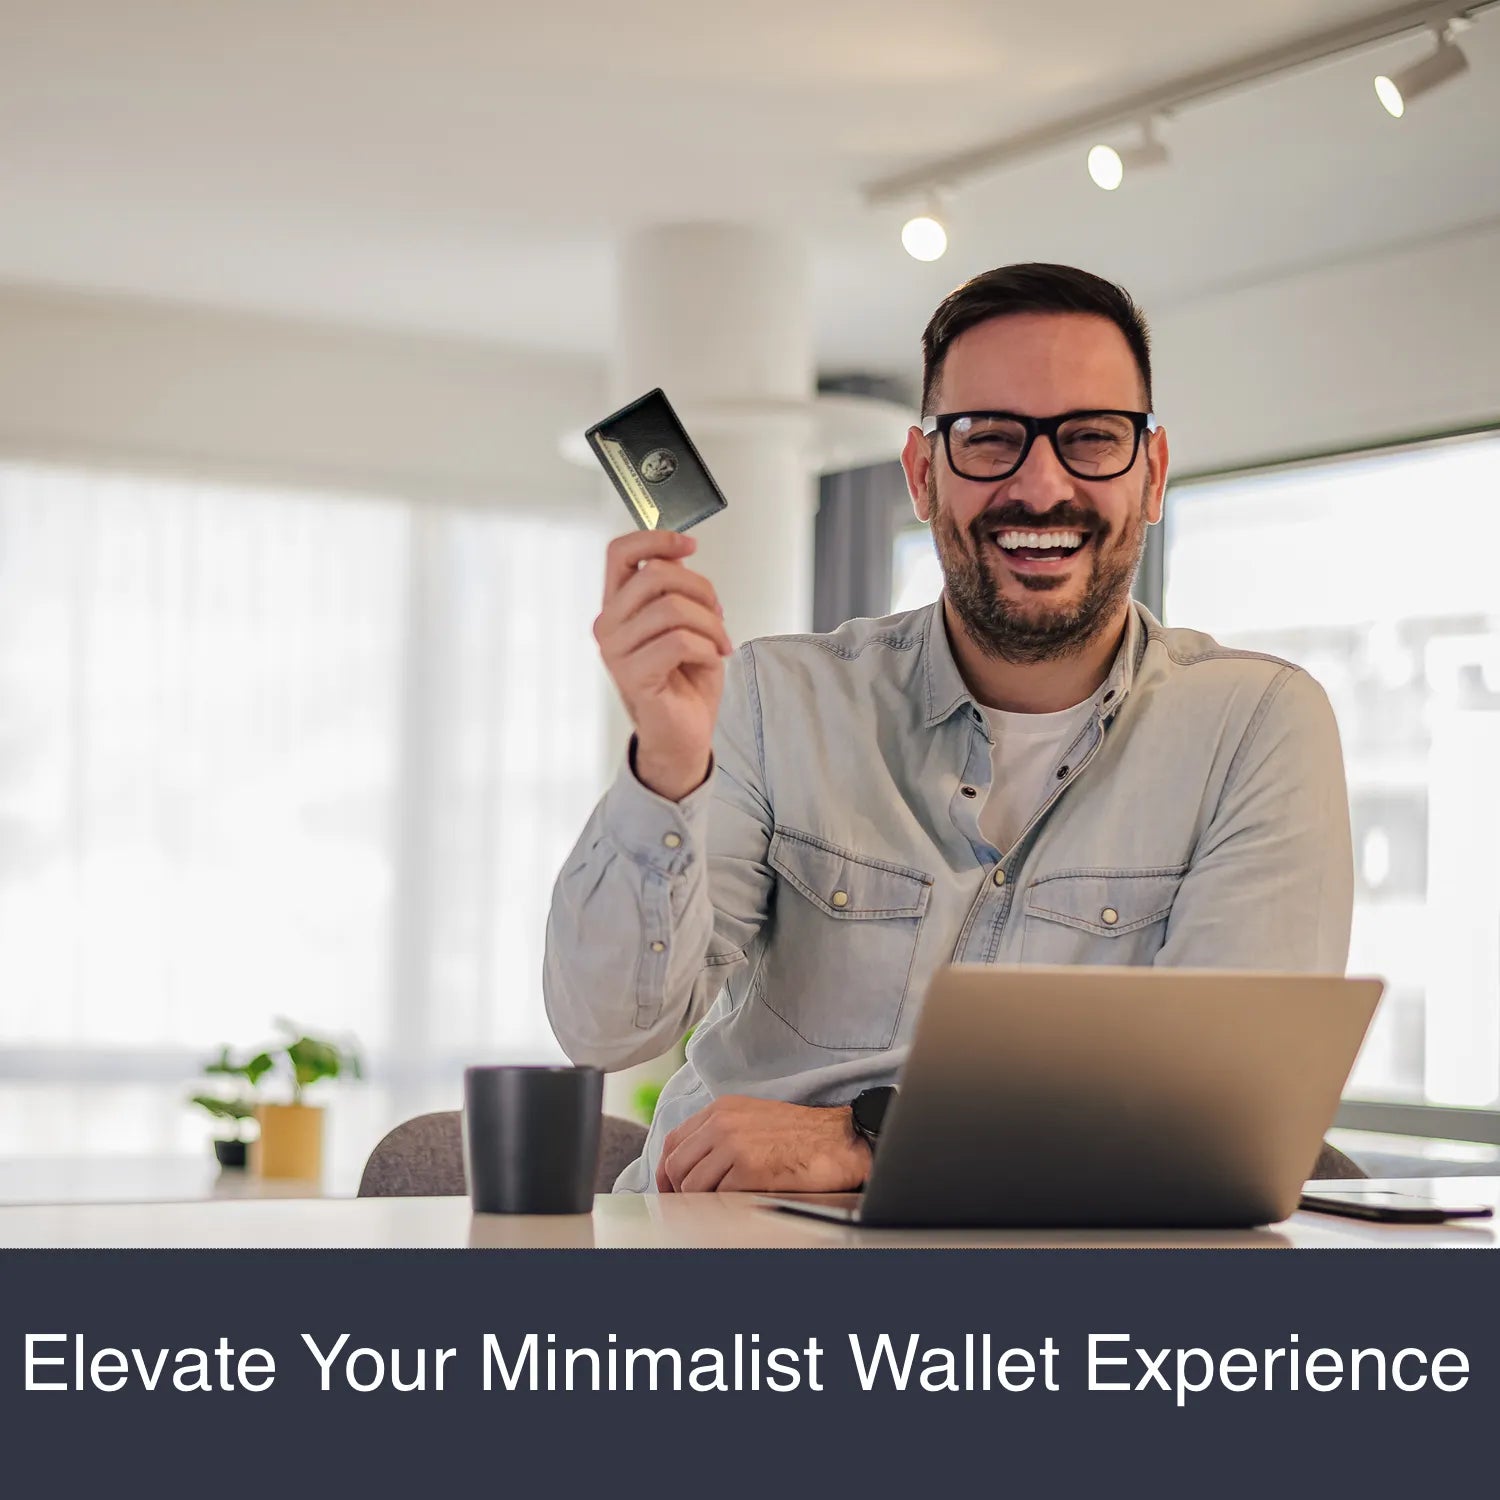 Best Minimalist Wallet For Men